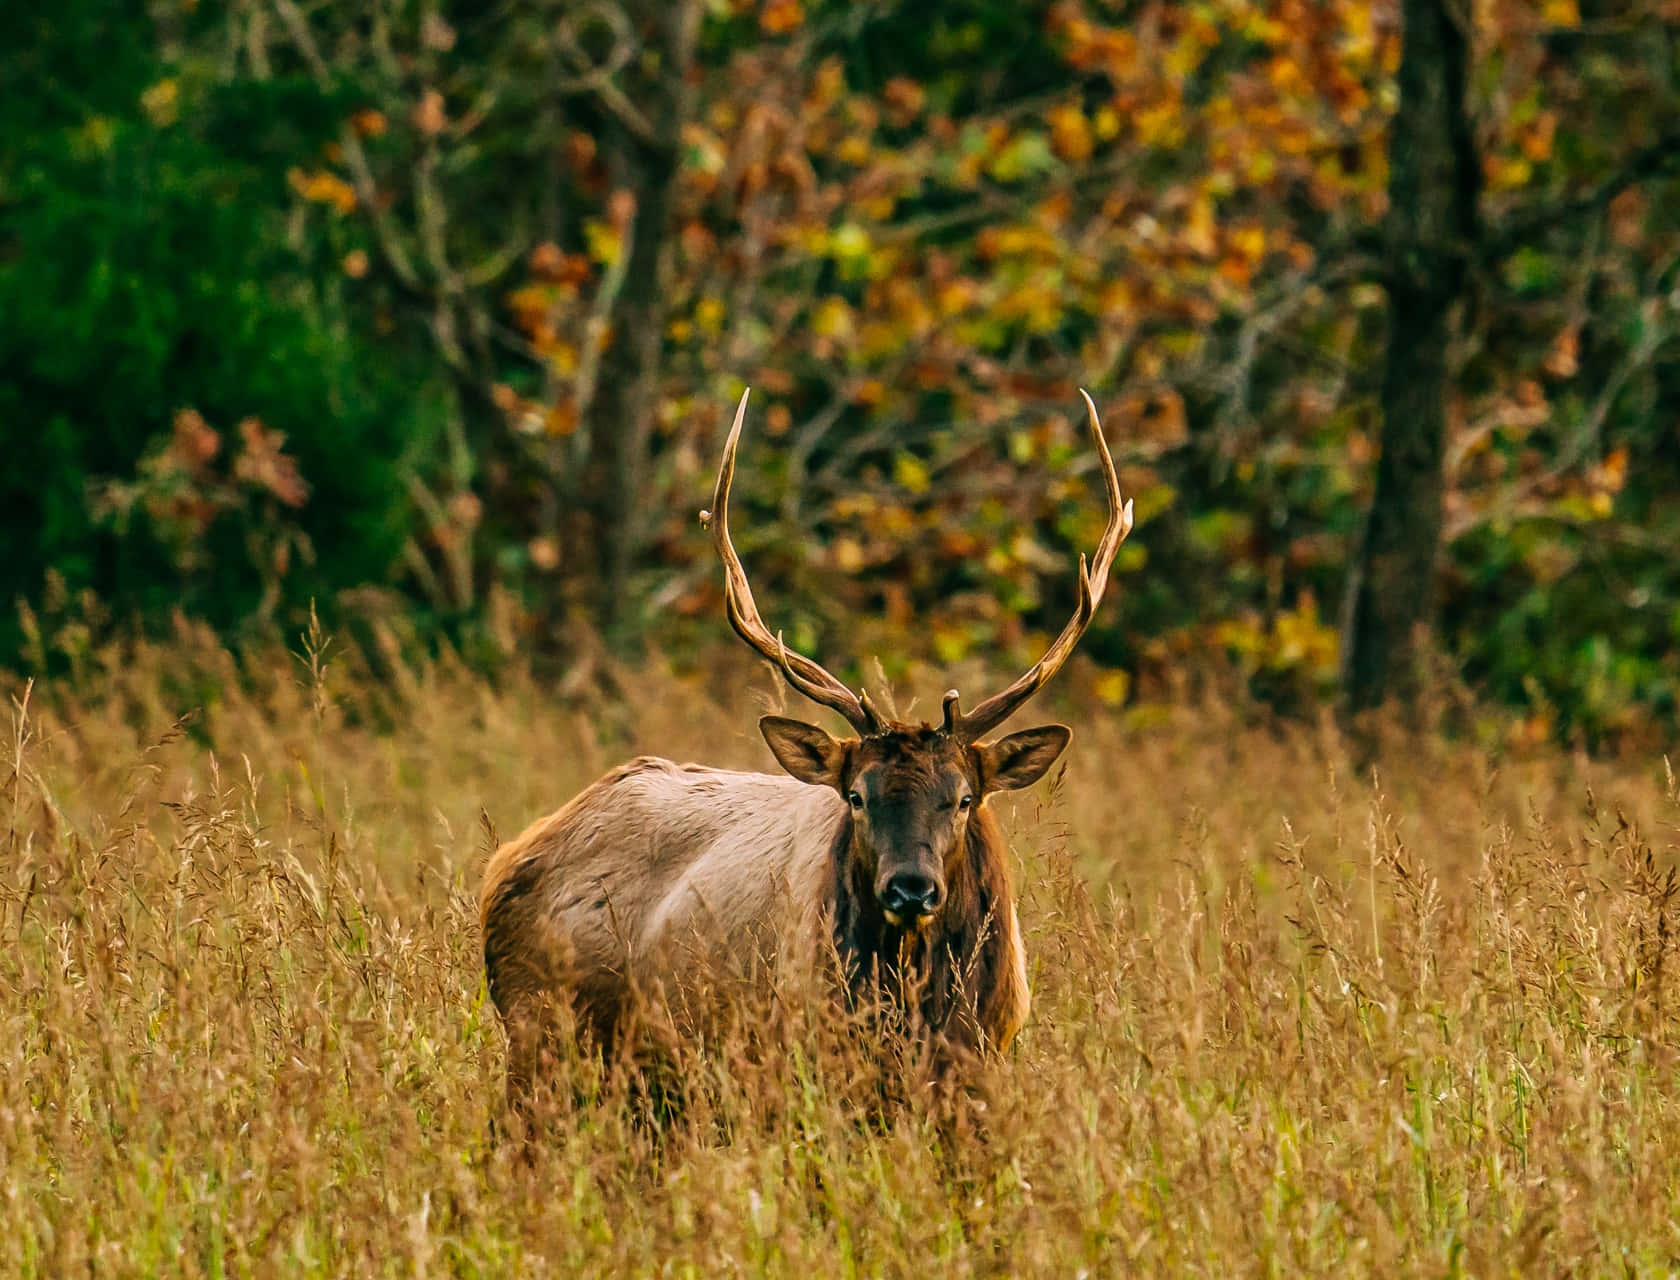 Majestic Elk in its Natural habitat